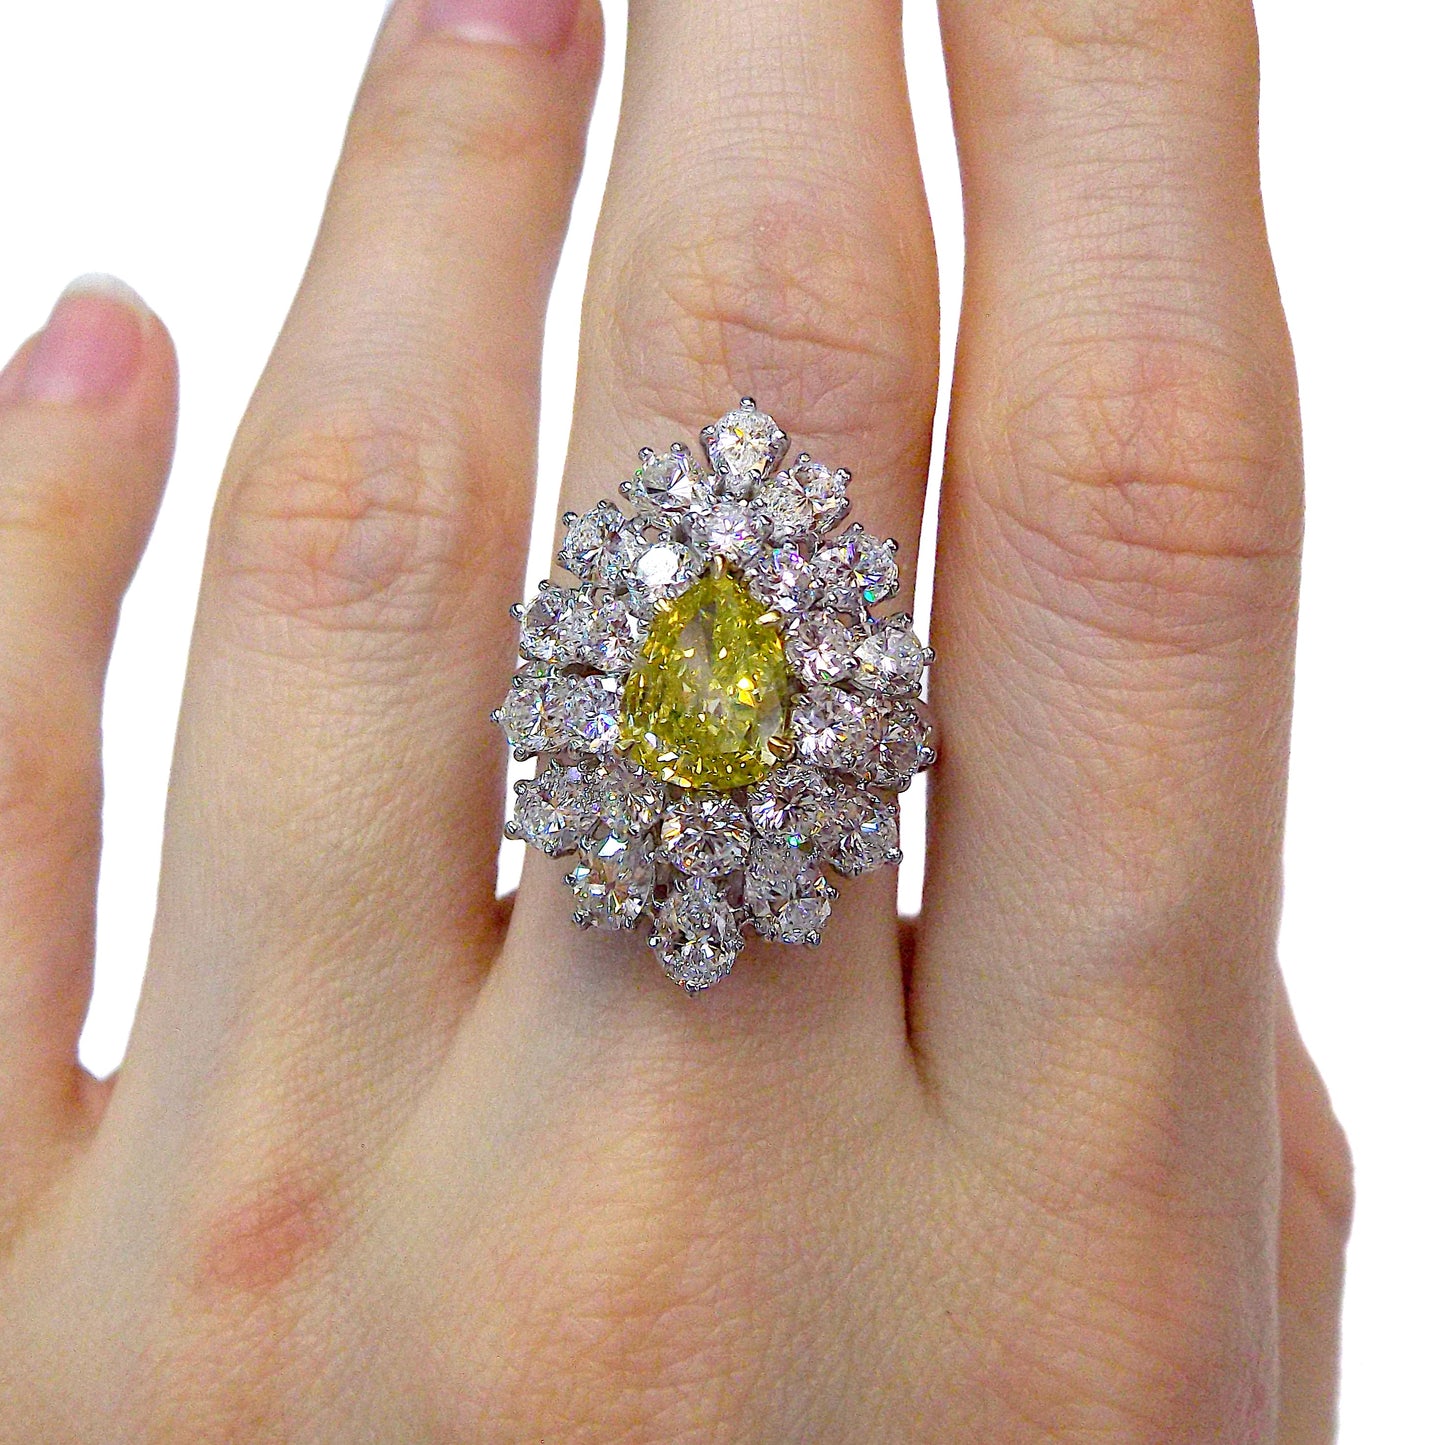 VCA Fancy Intense Yellow Diamond Ring